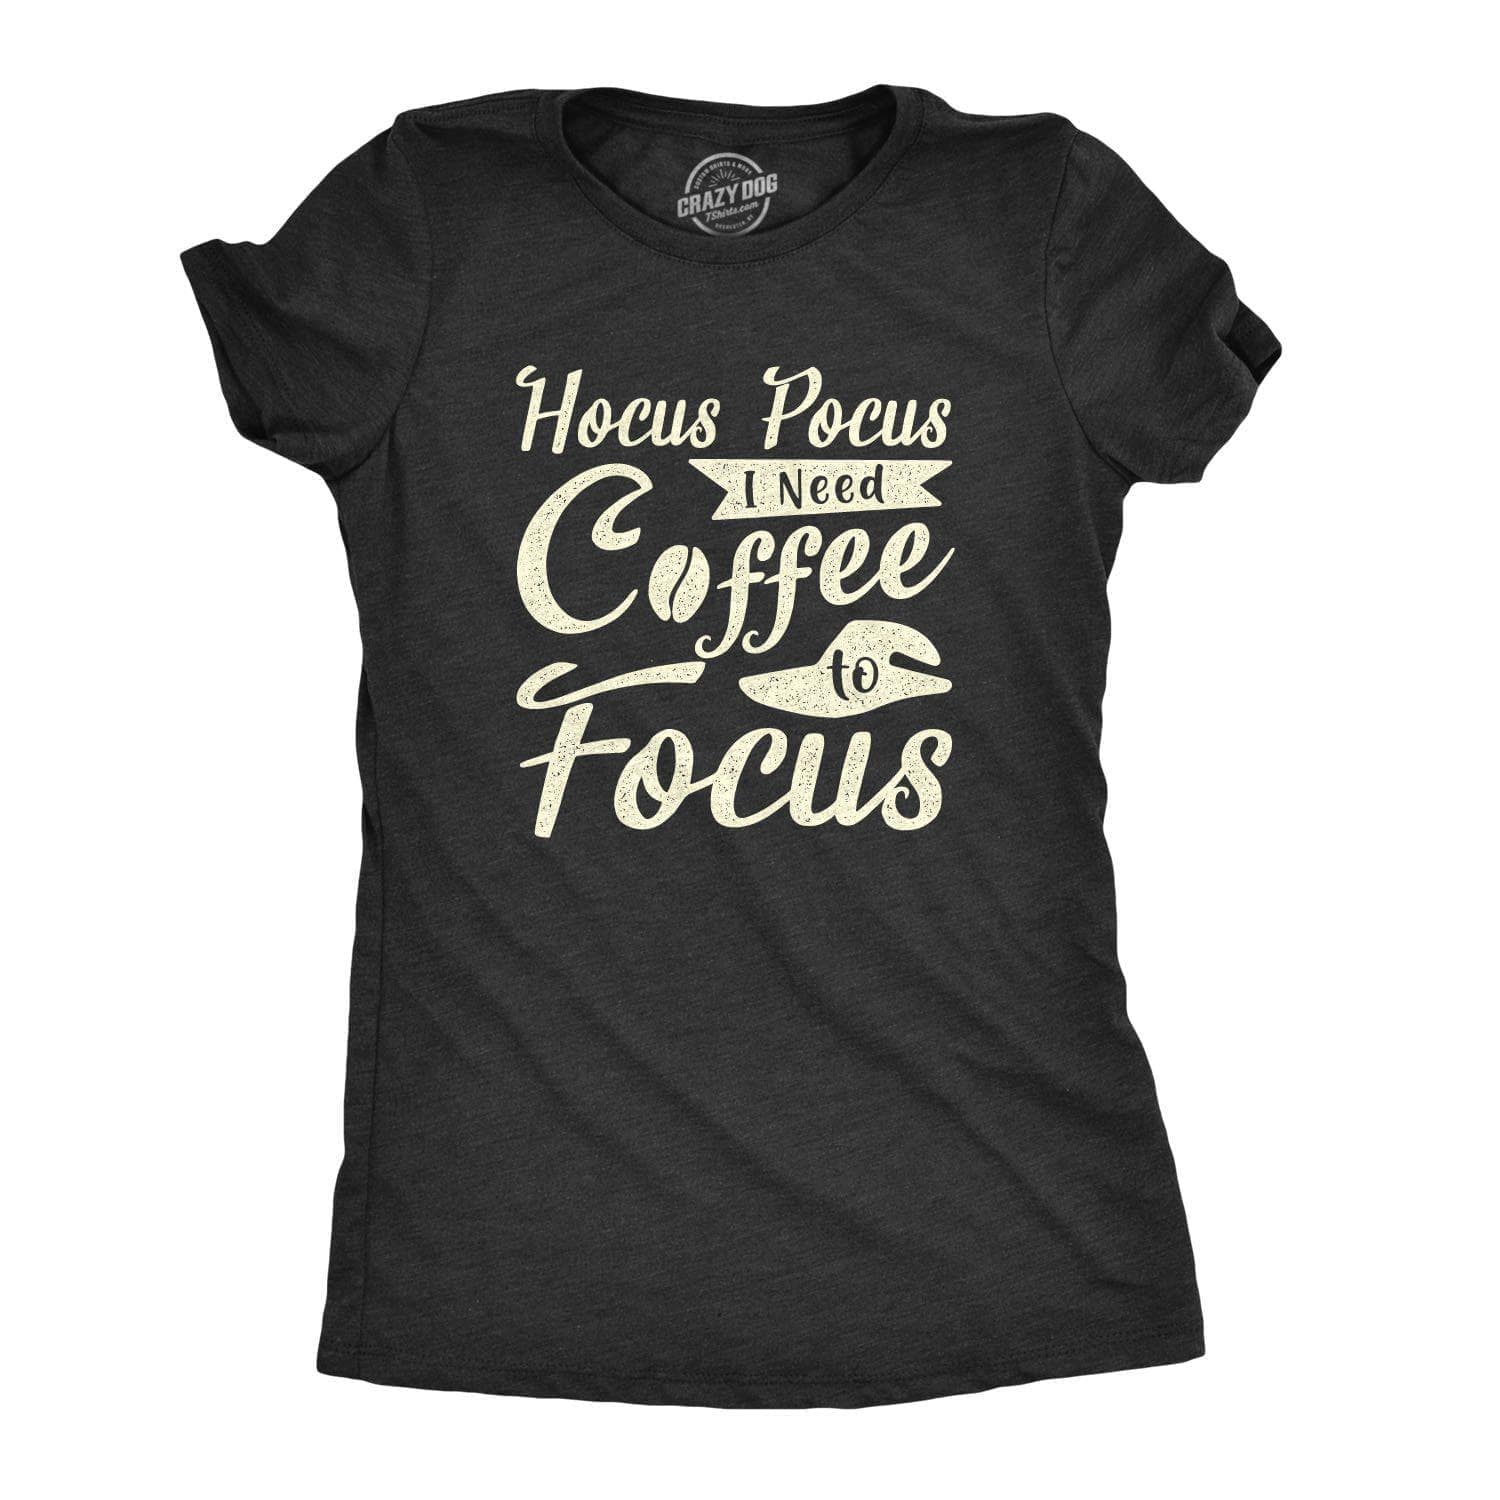 Hocus Pocus I Need Coffee To Focus Women's Tshirt - Crazy Dog T-Shirts